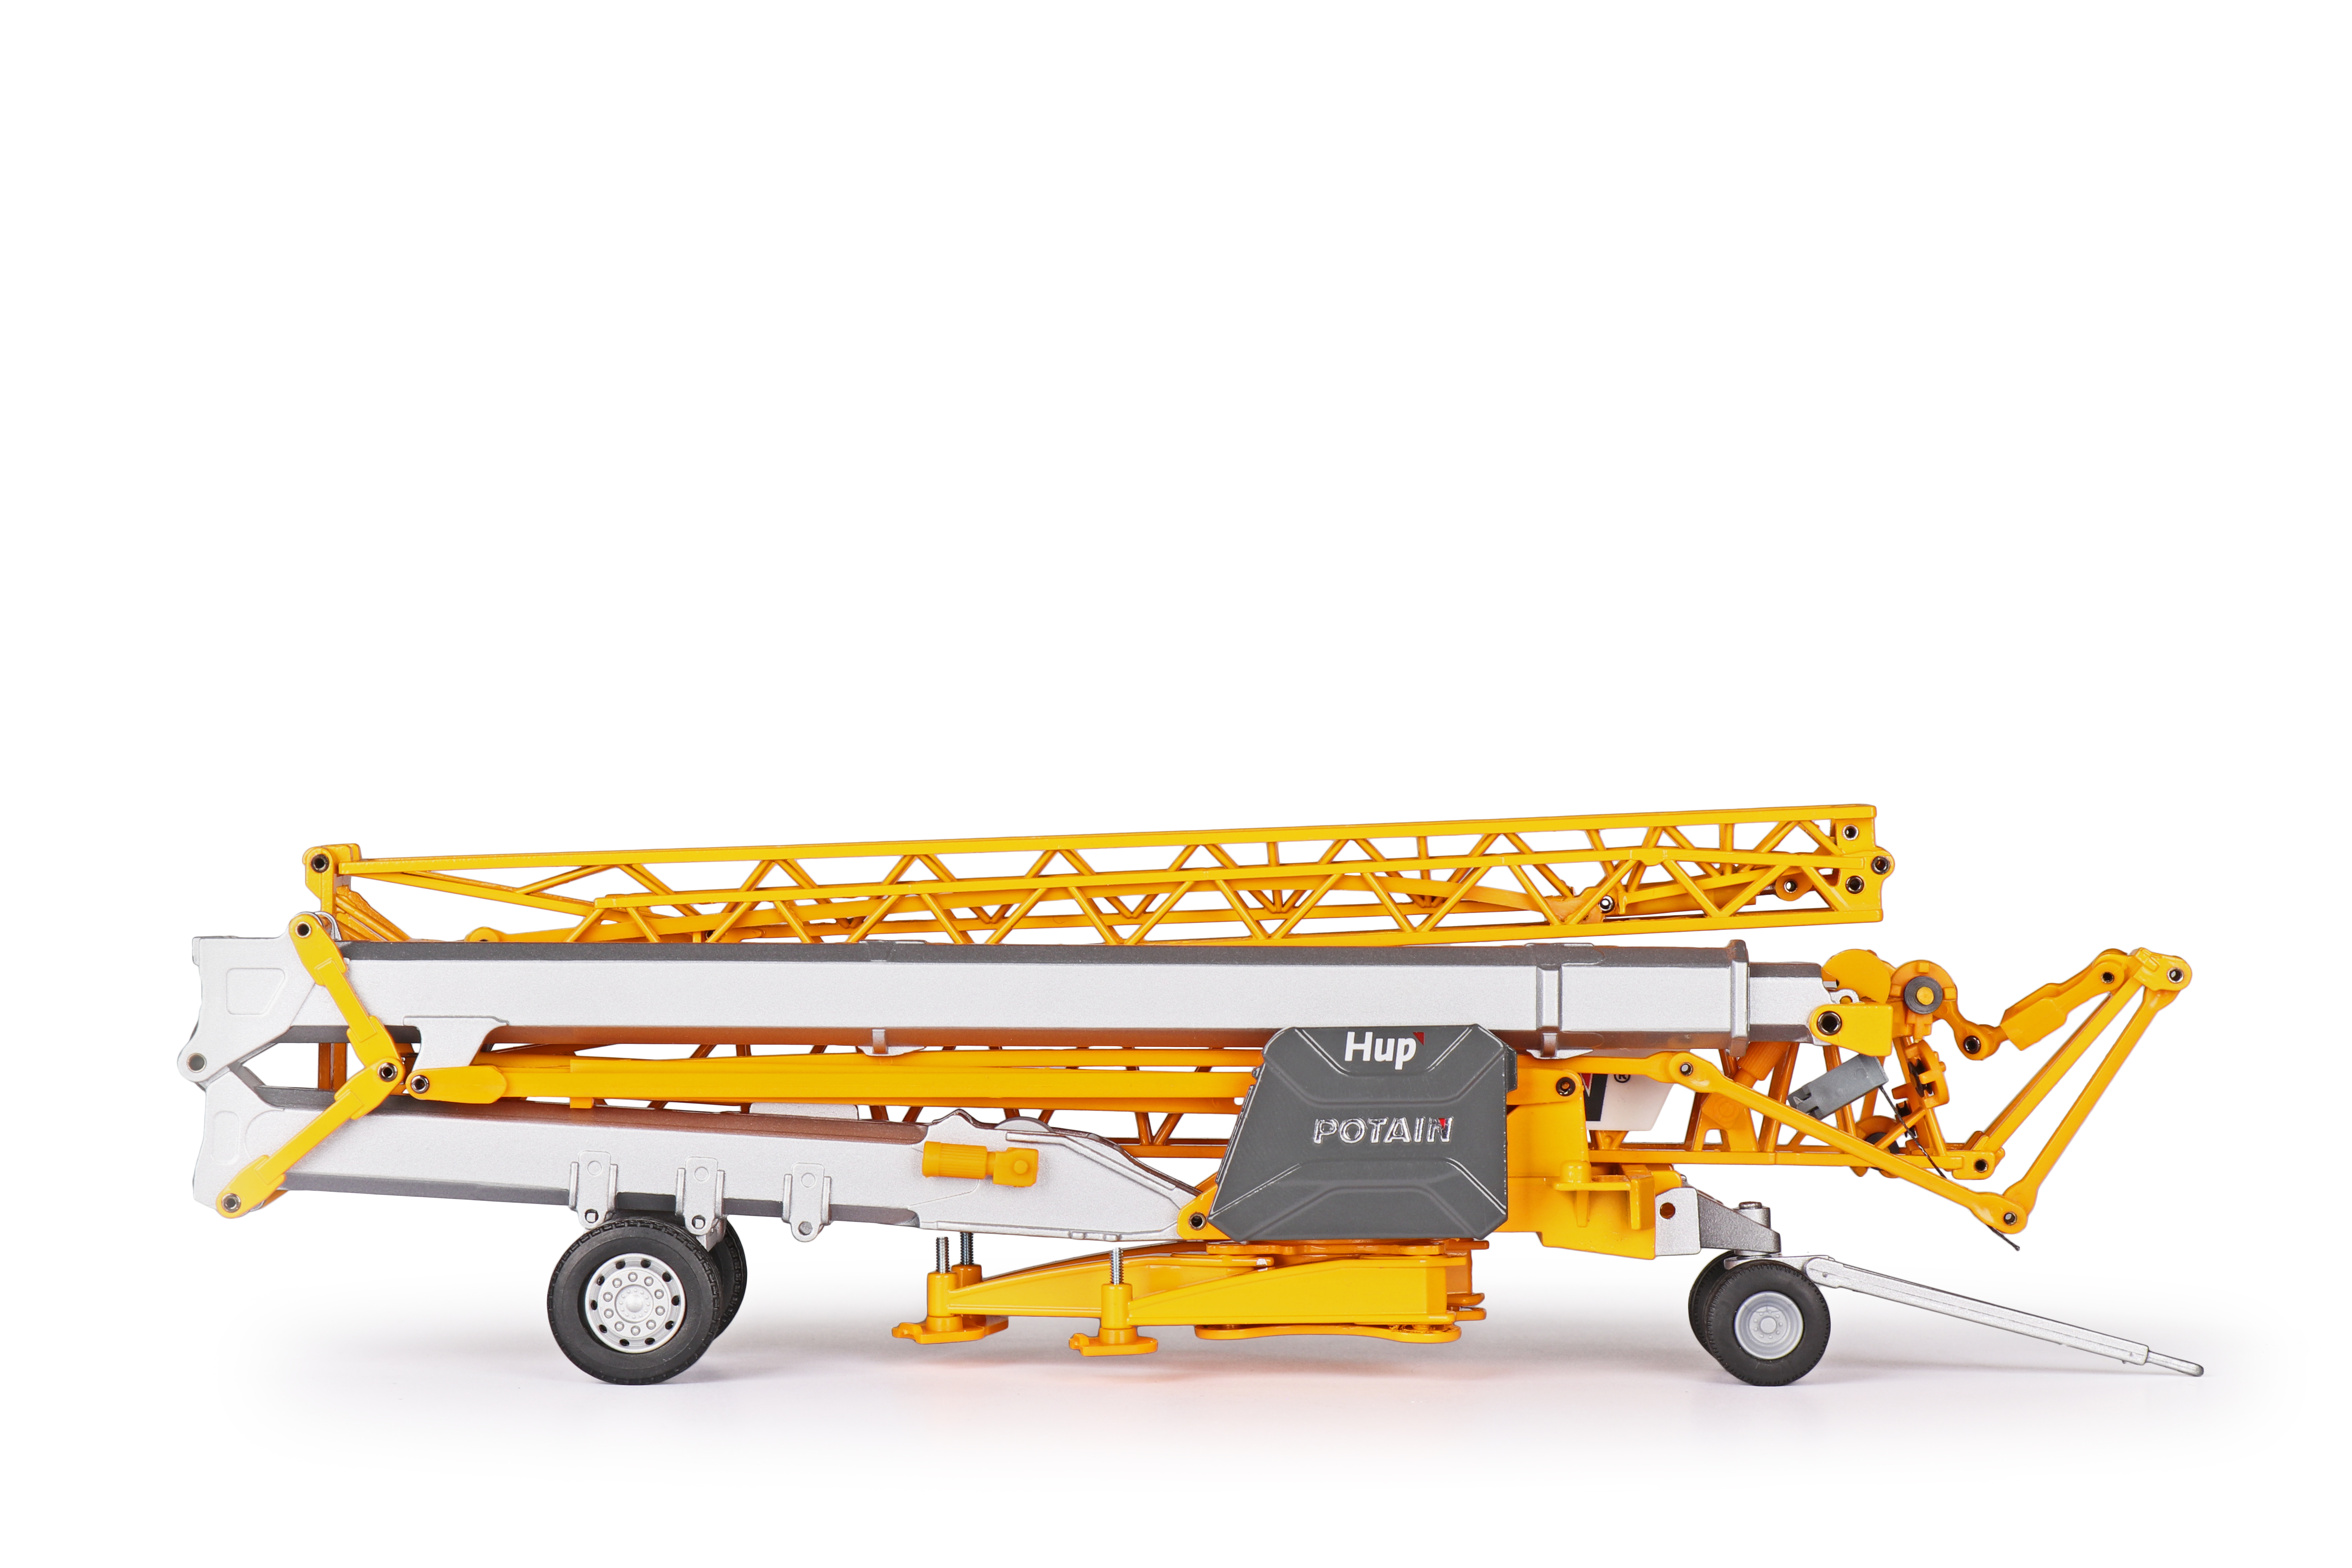 POTAIN Hup 32-27 Quick set-up crane with Axle units, Modelothek, Models